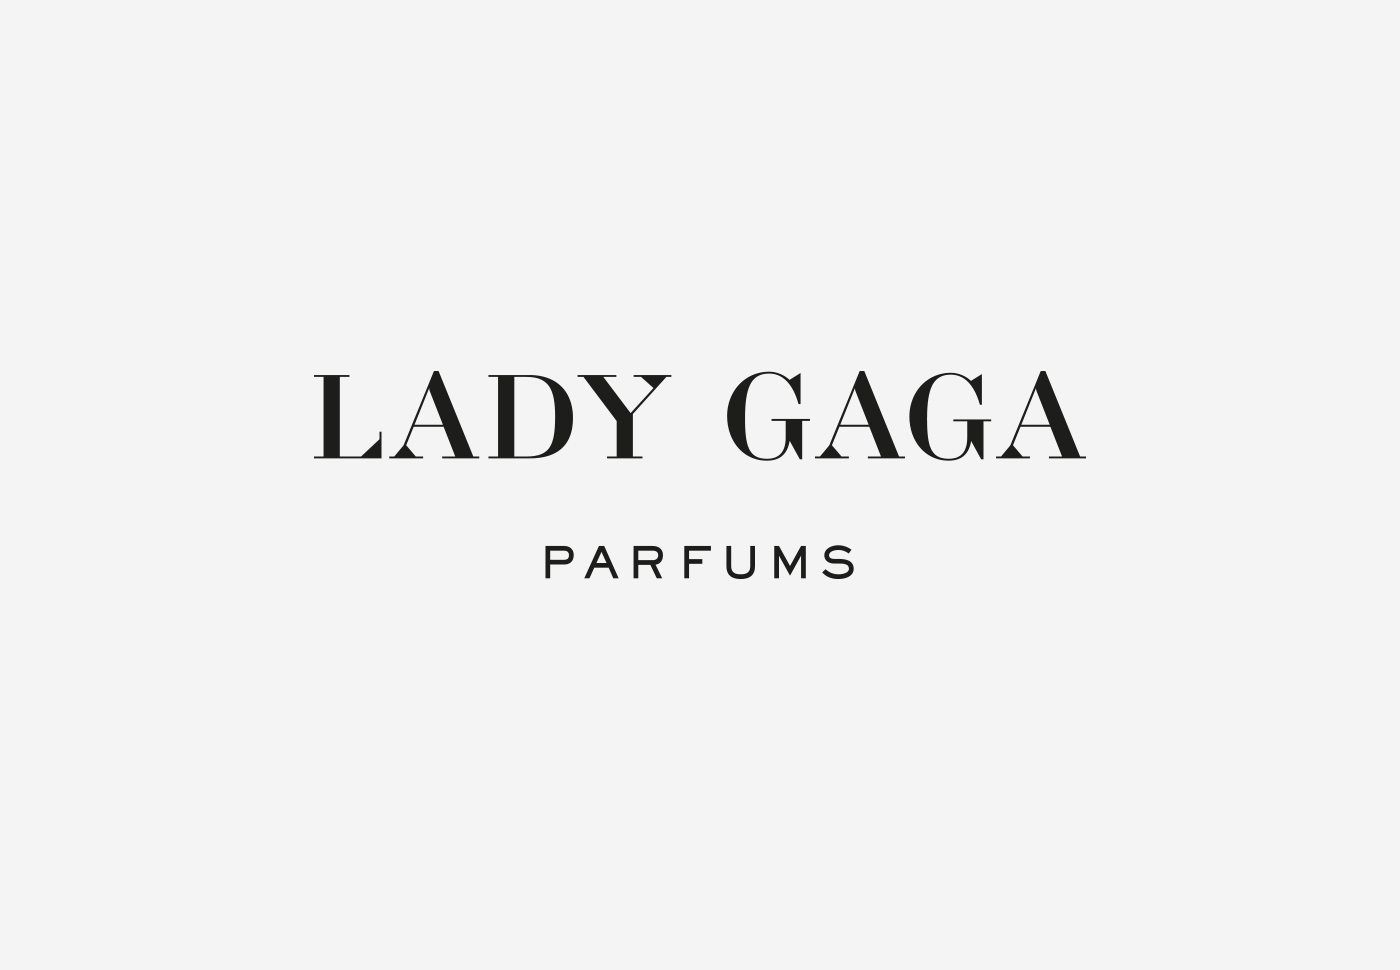 Lady Gaga Parfums – Brand identity